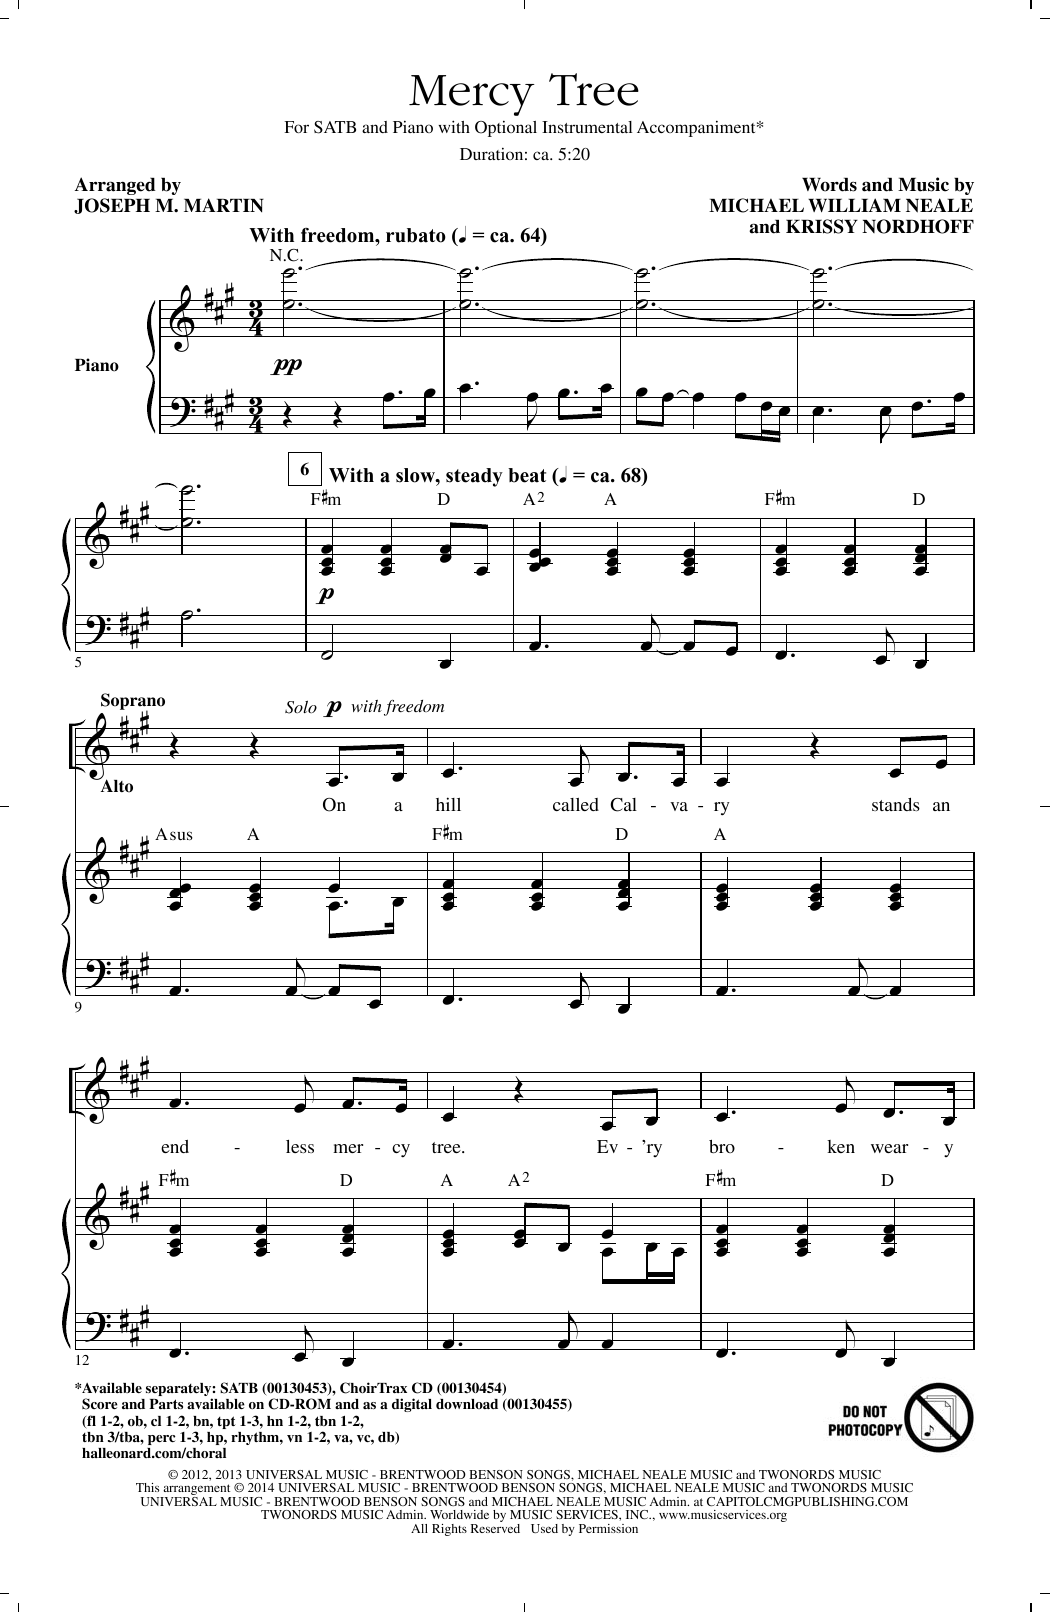 Joseph M. Martin Mercy Tree Sheet Music Notes & Chords for SAB - Download or Print PDF